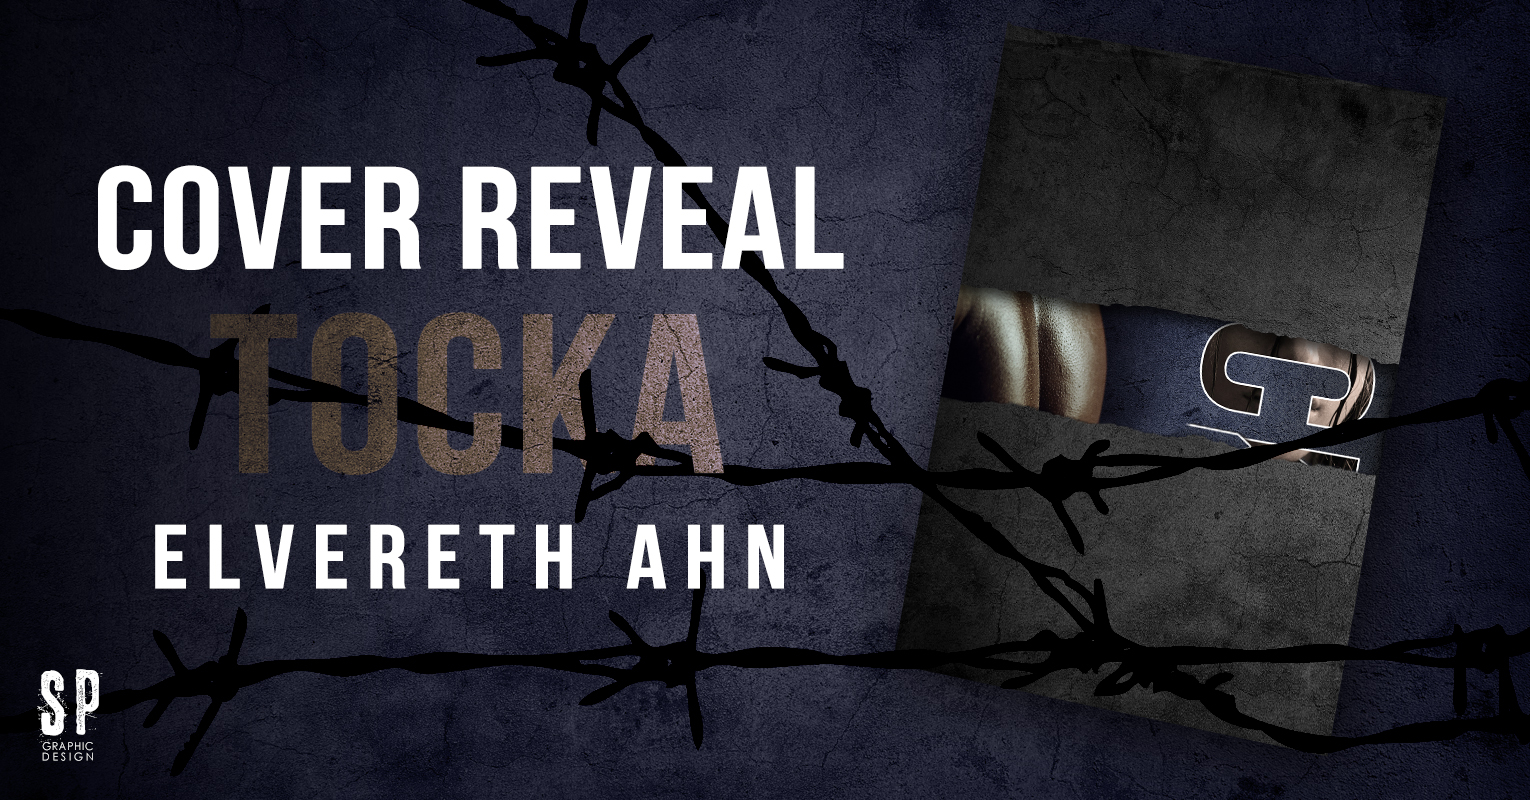 Cover Reveal “Tocka di Elvereth Ahn”